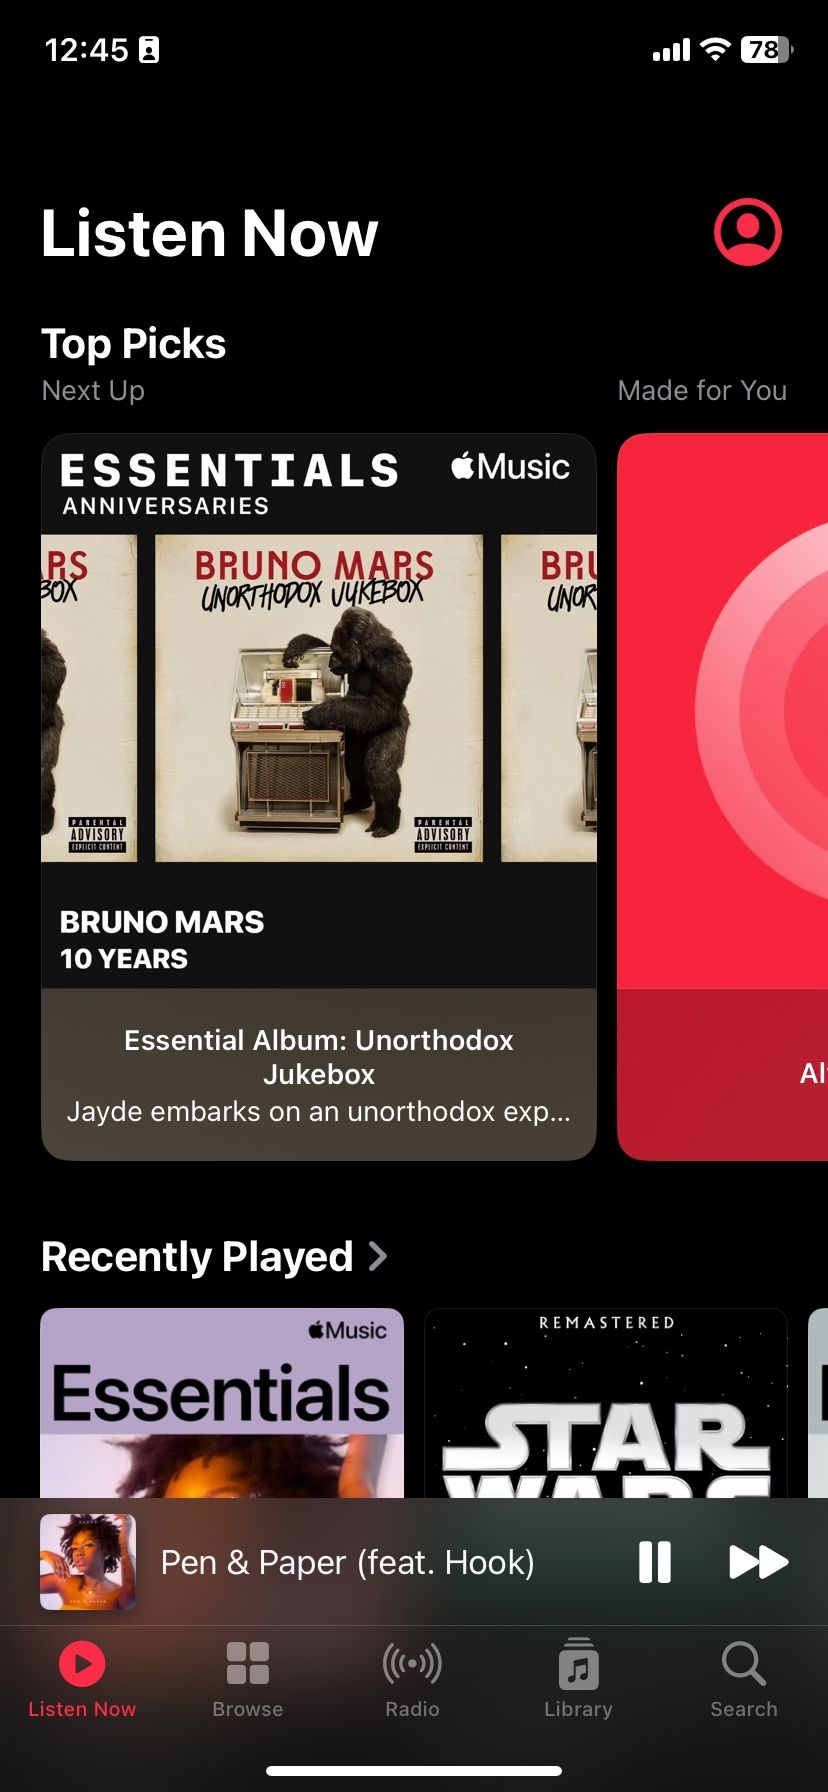 Apple Music app interface on iOS